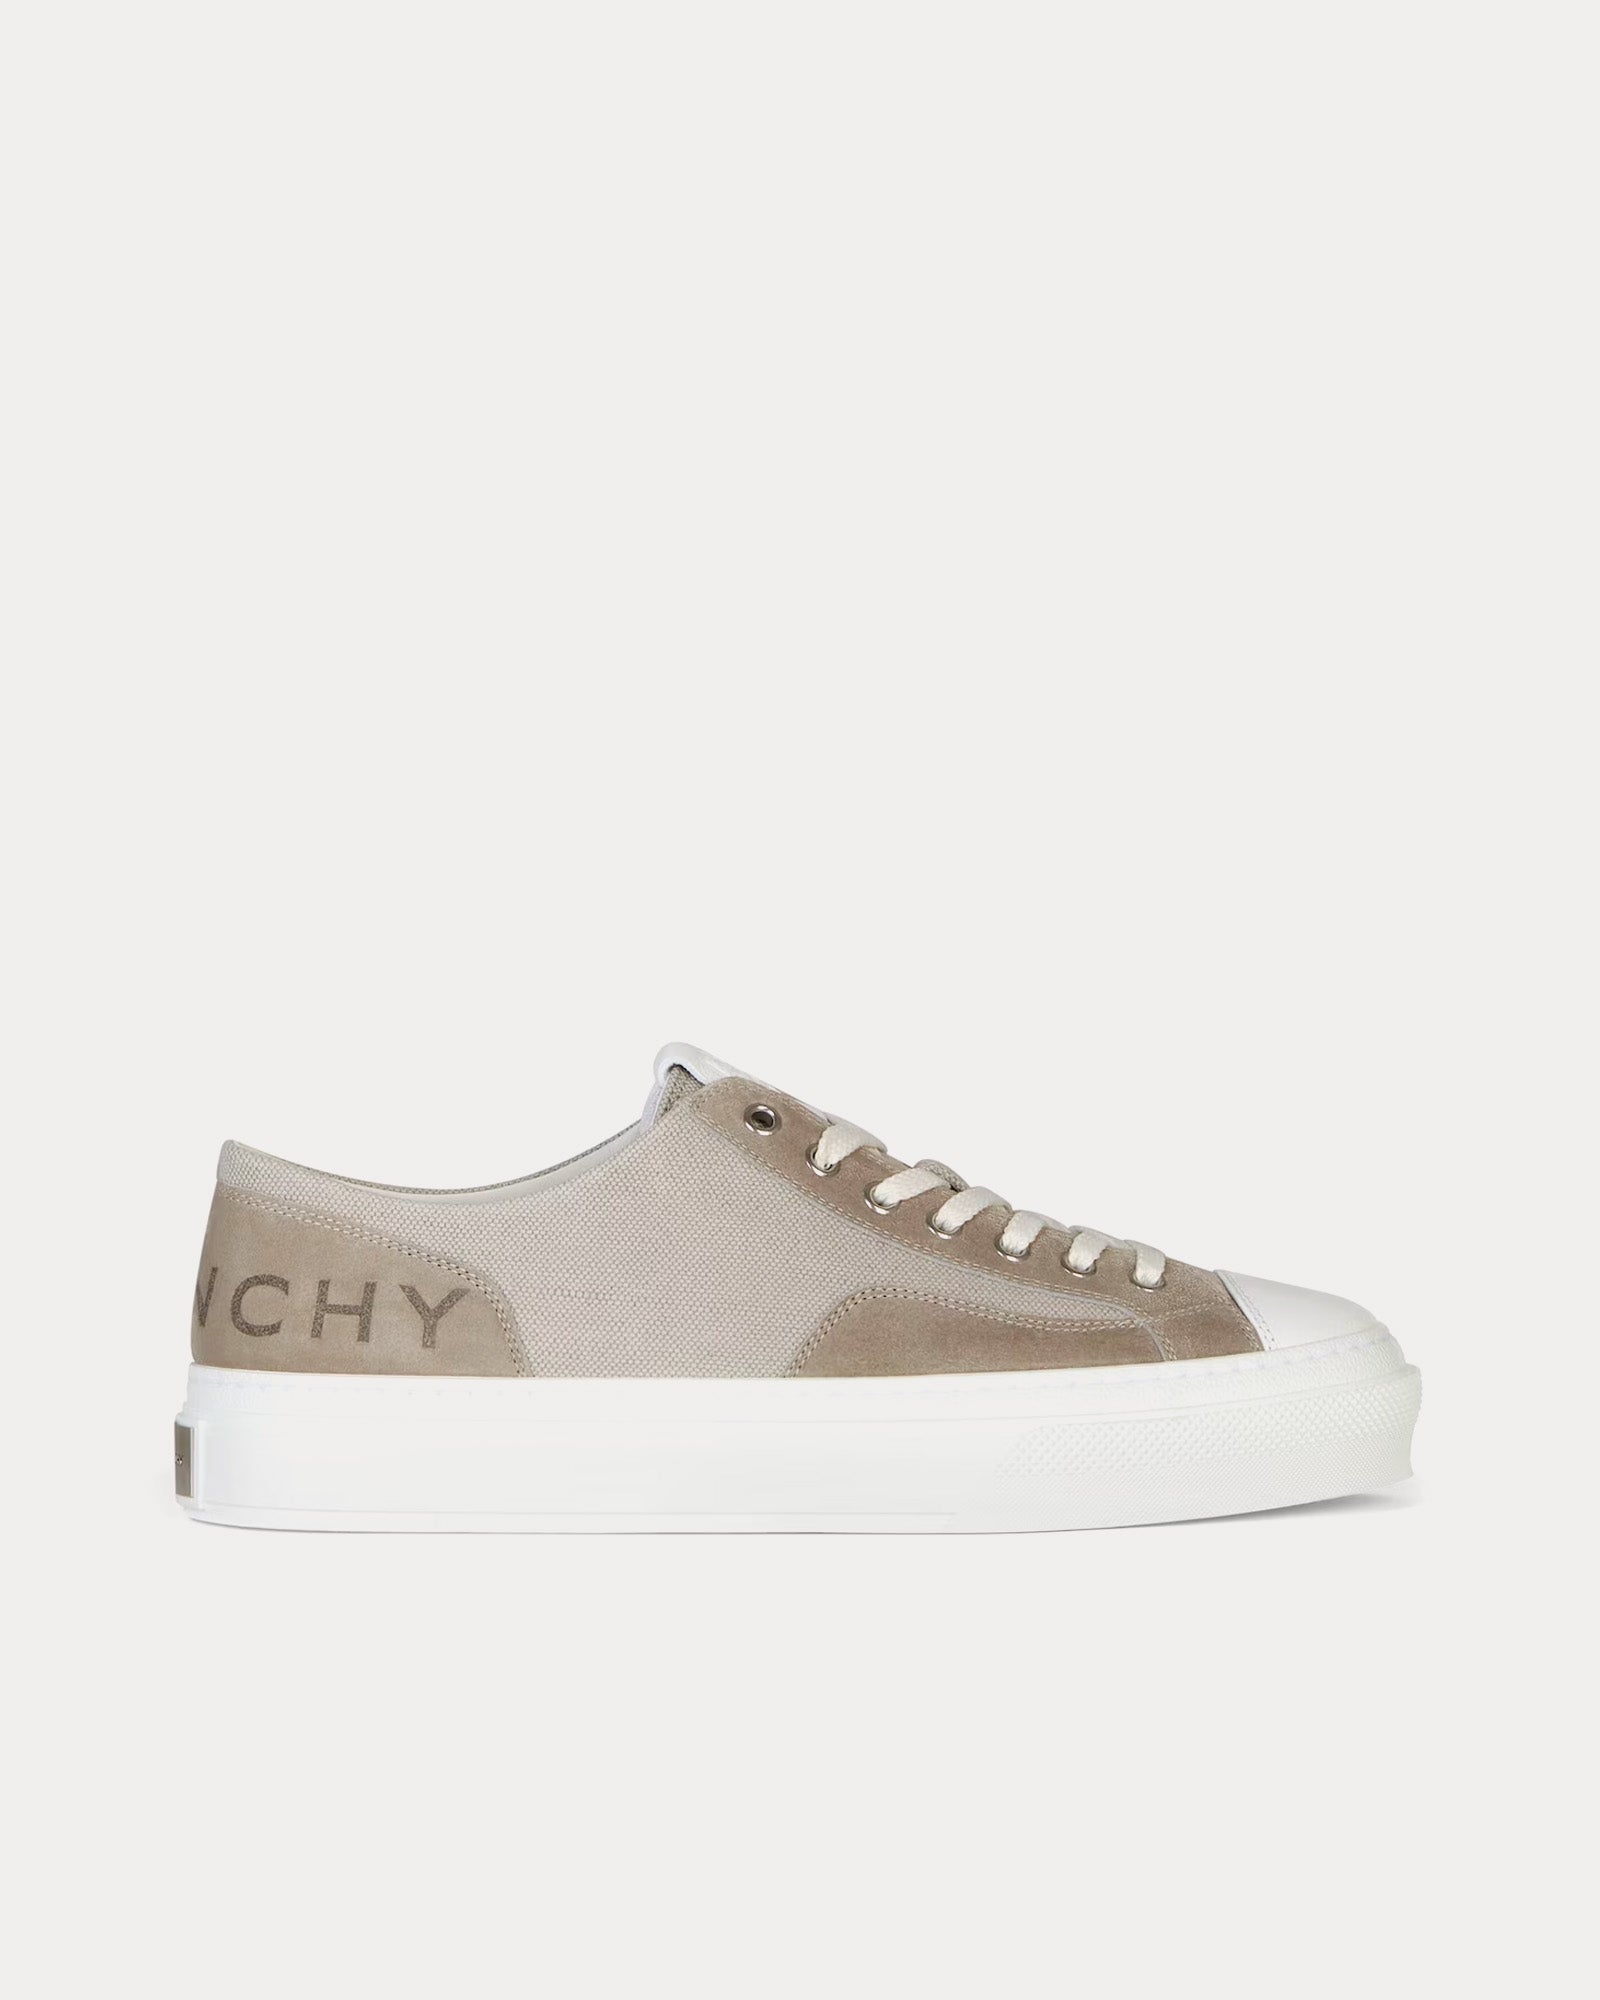 Givenchy - City Canvas & Suede Medium Grey Low Top Sneakers